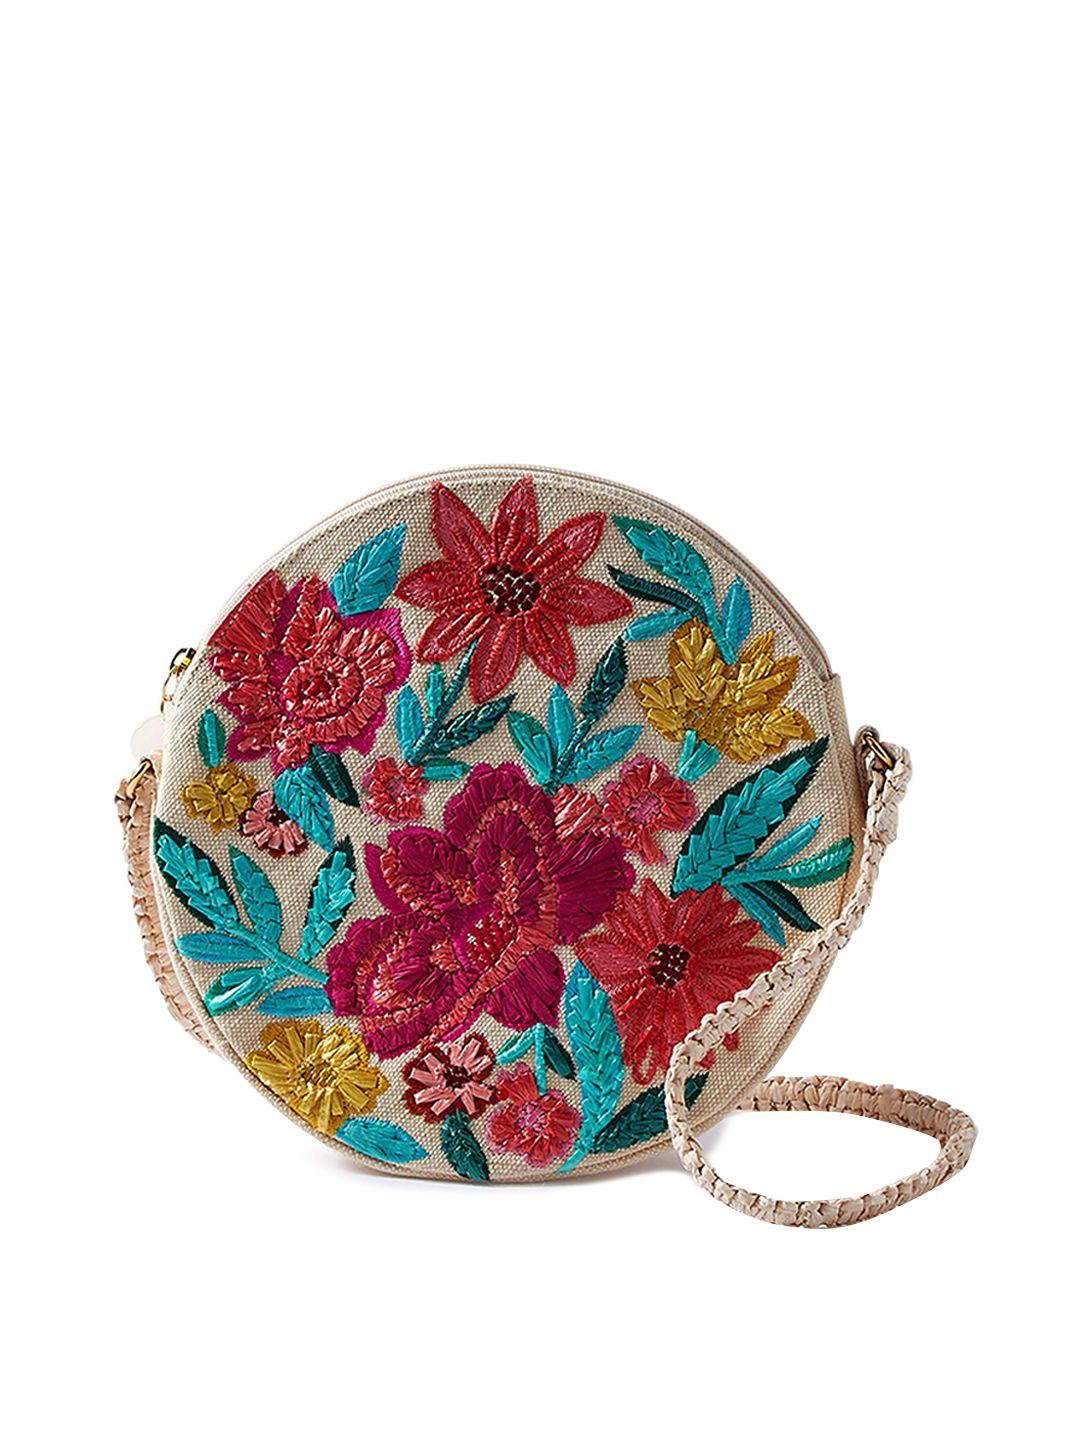 accessorize beige & red embroidered purse clutch